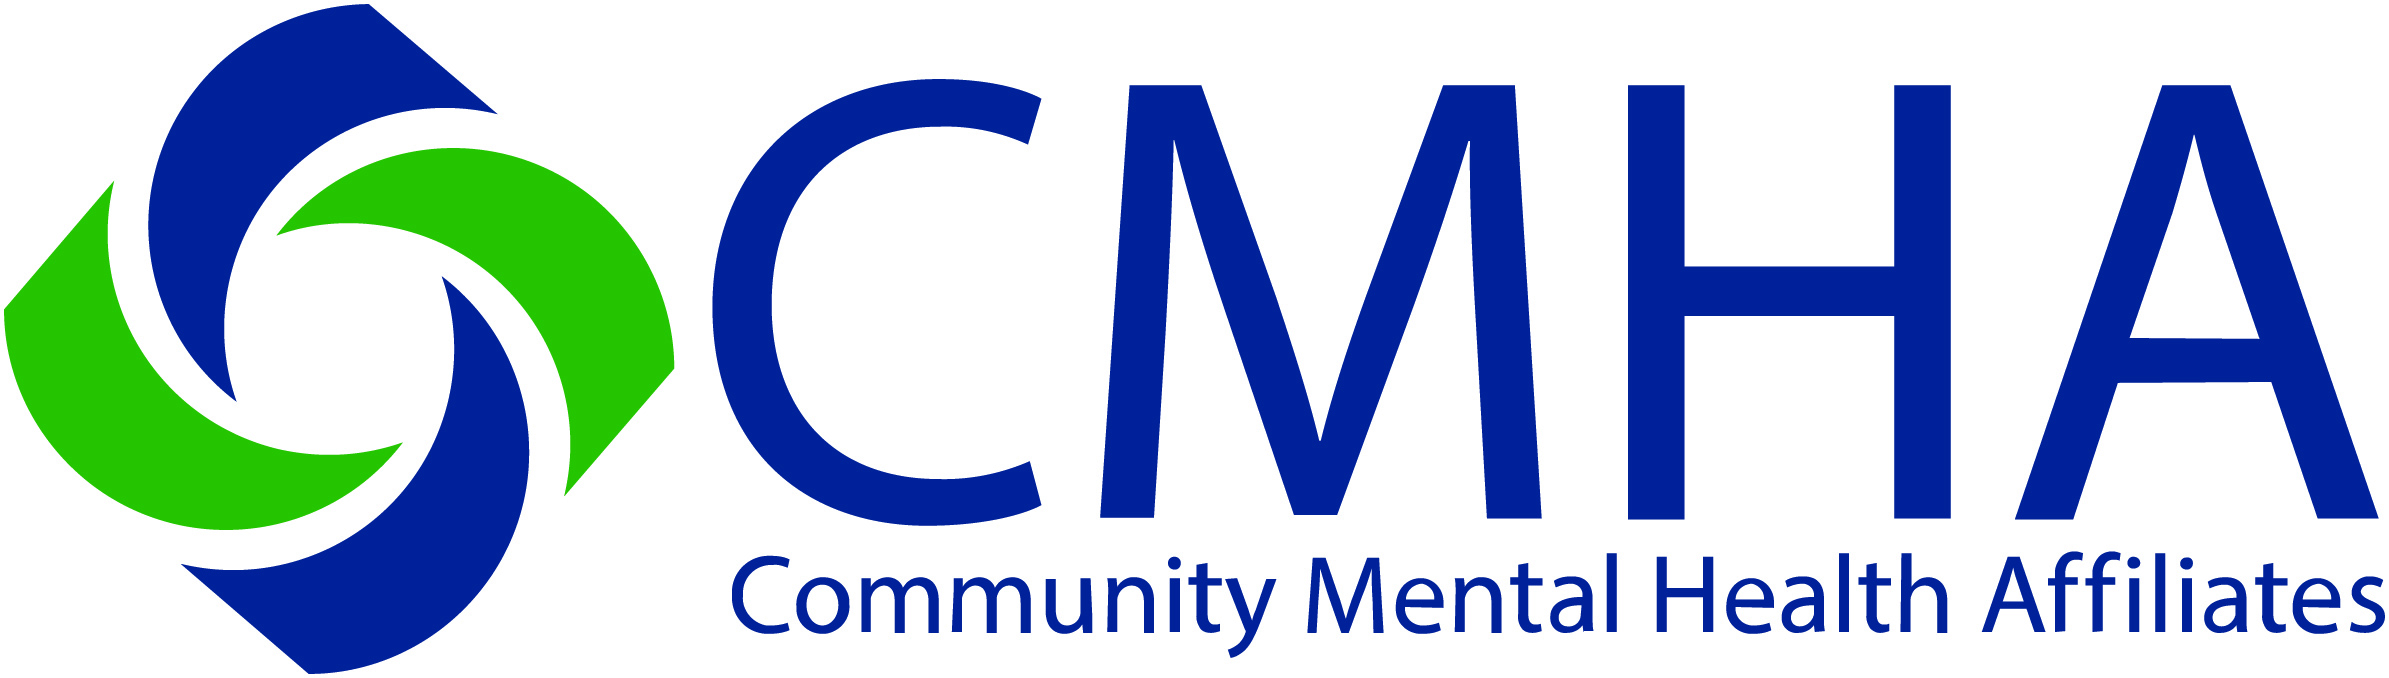 Community Mental Health Affiliates